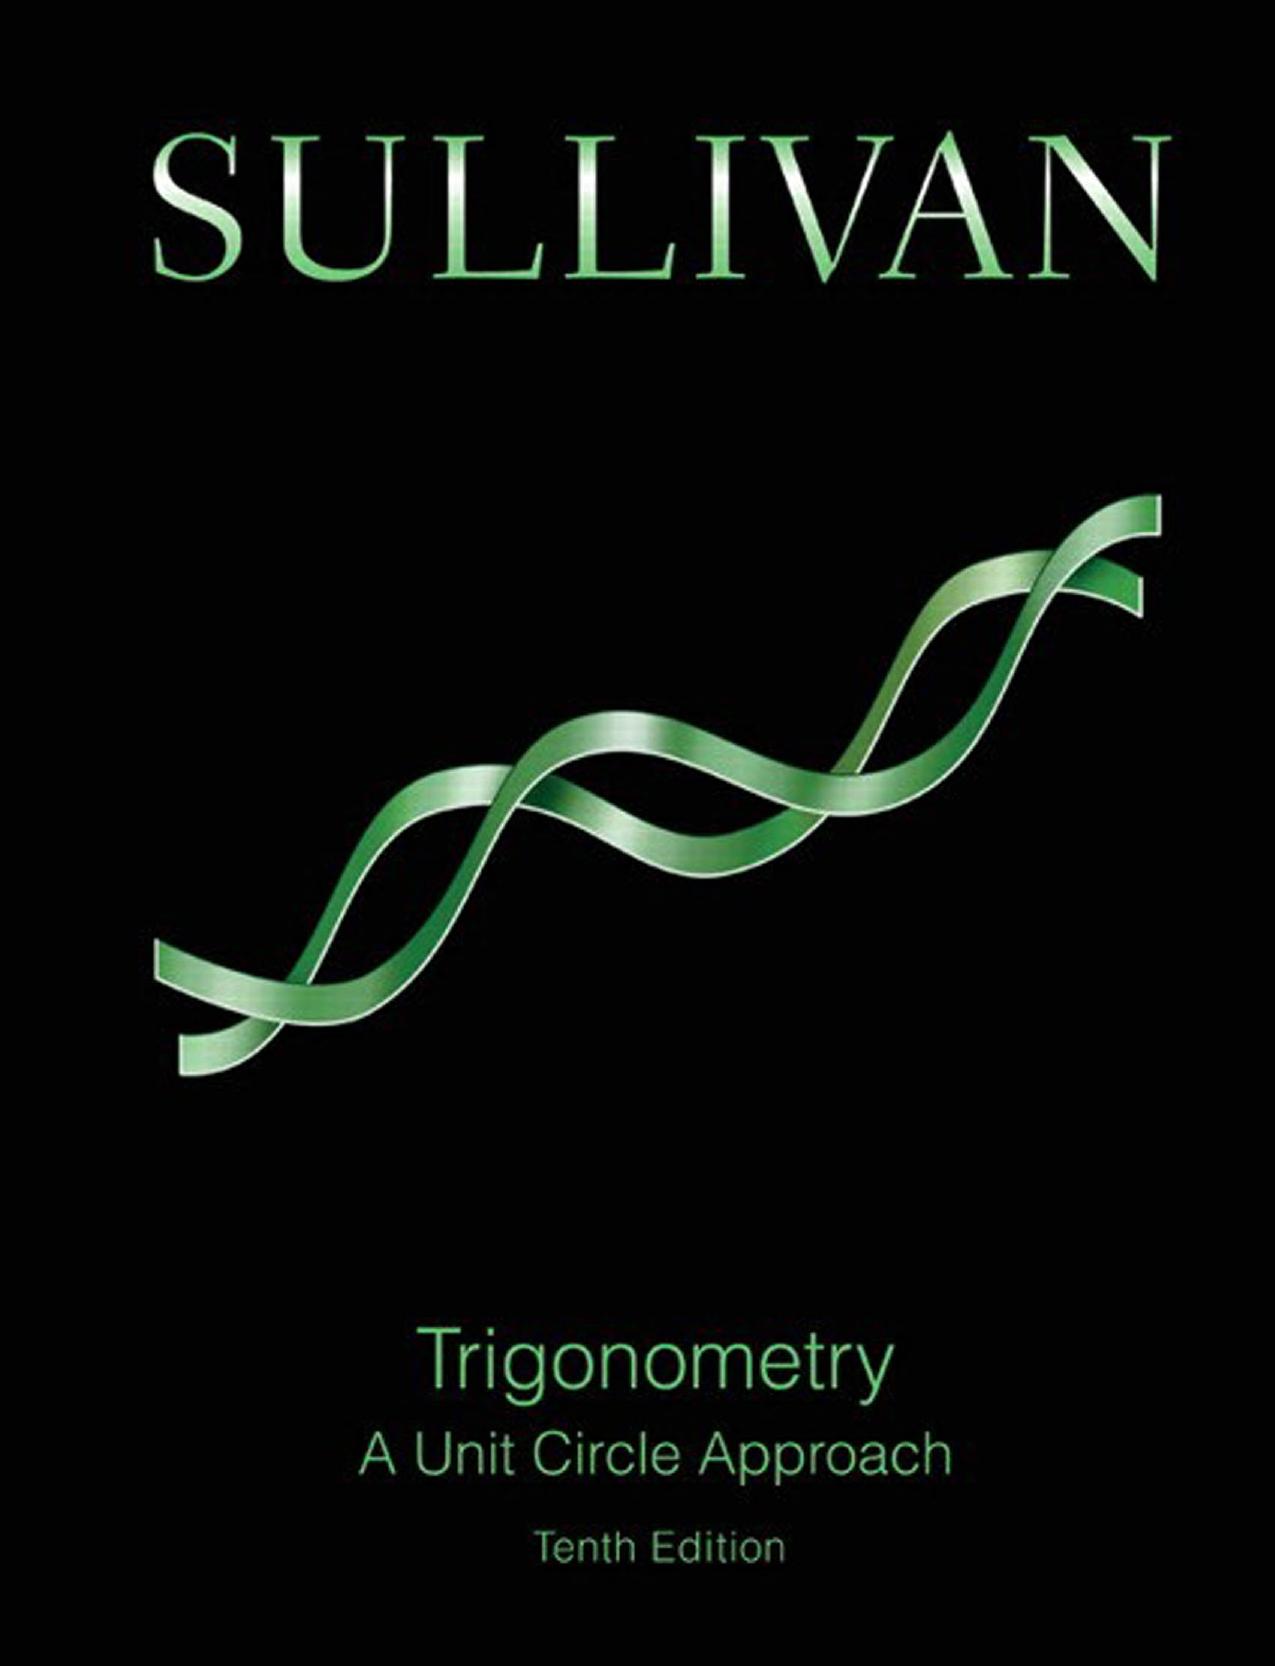 Trigonometry A Unit Circle Approach 10th Edition by Michael Sullivan